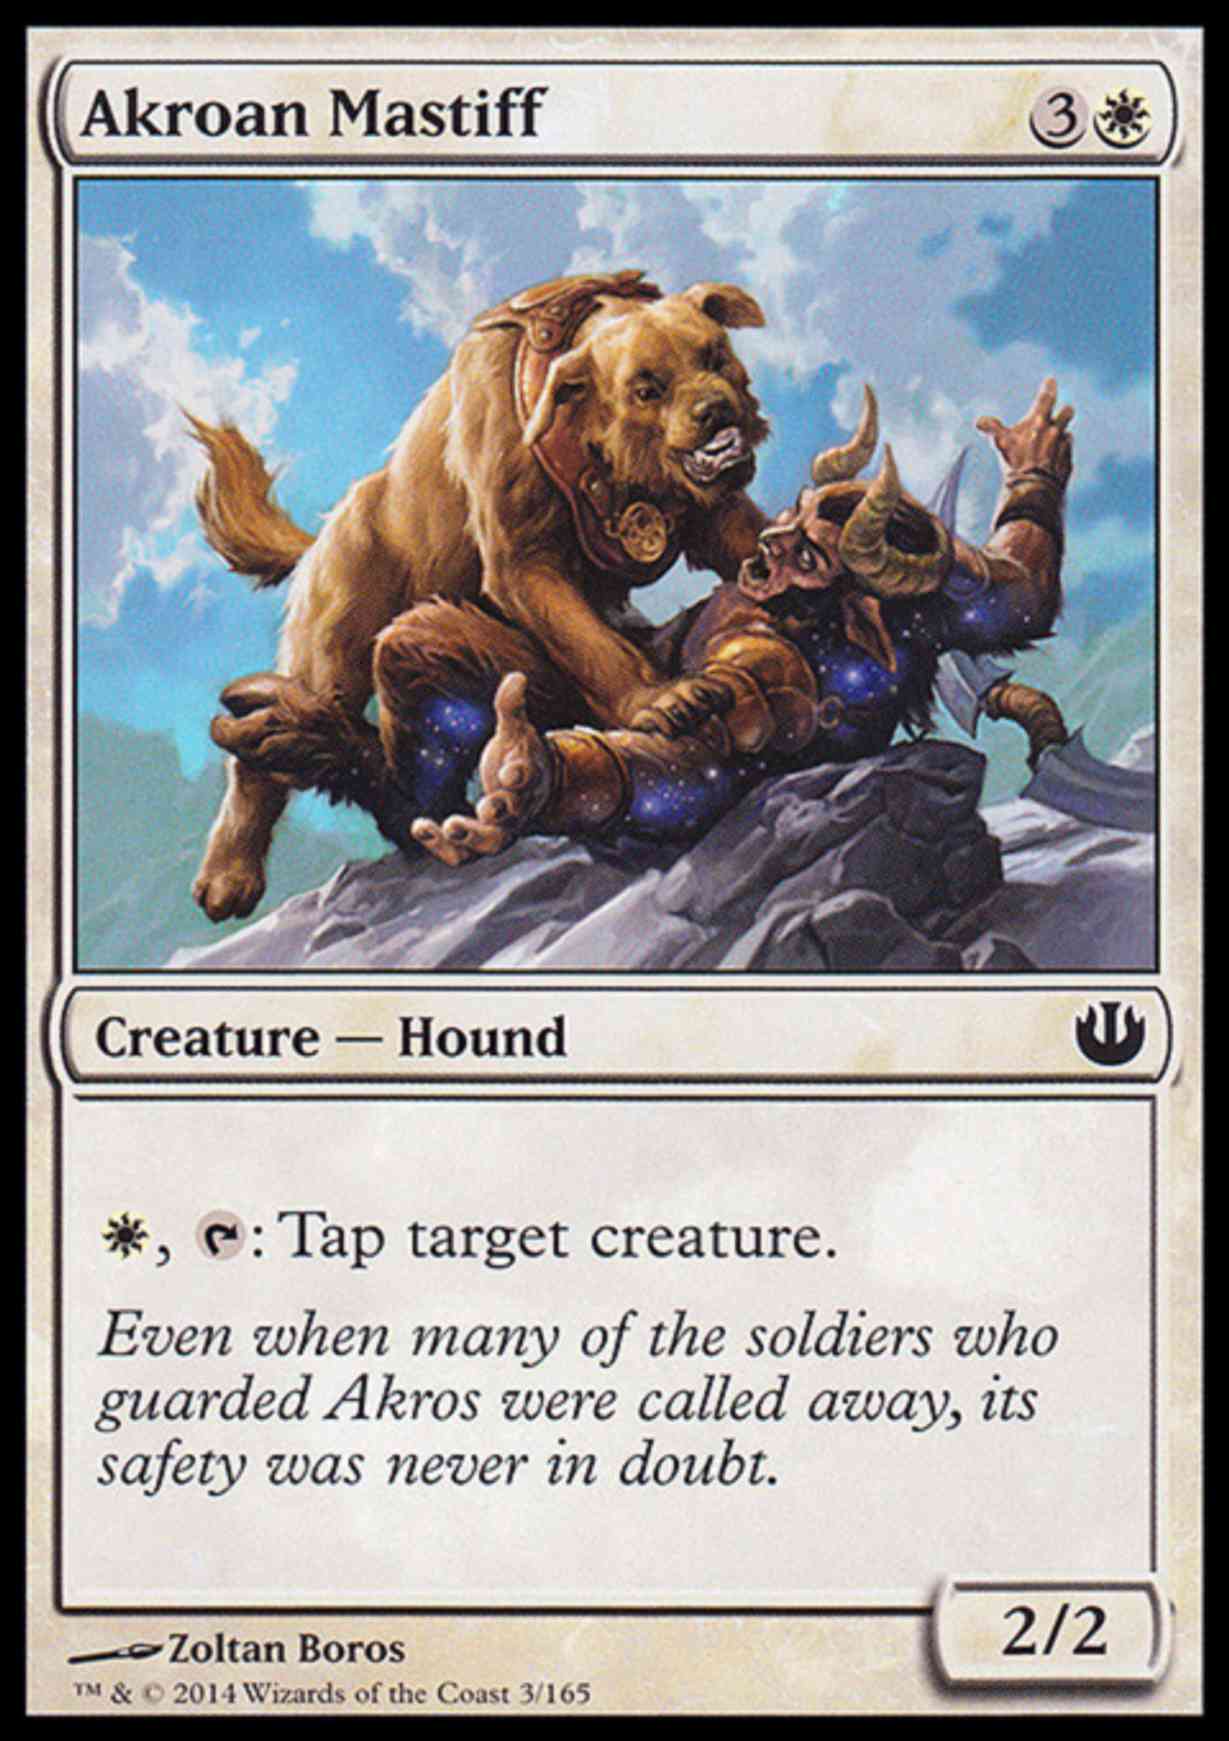 Akroan Mastiff magic card front